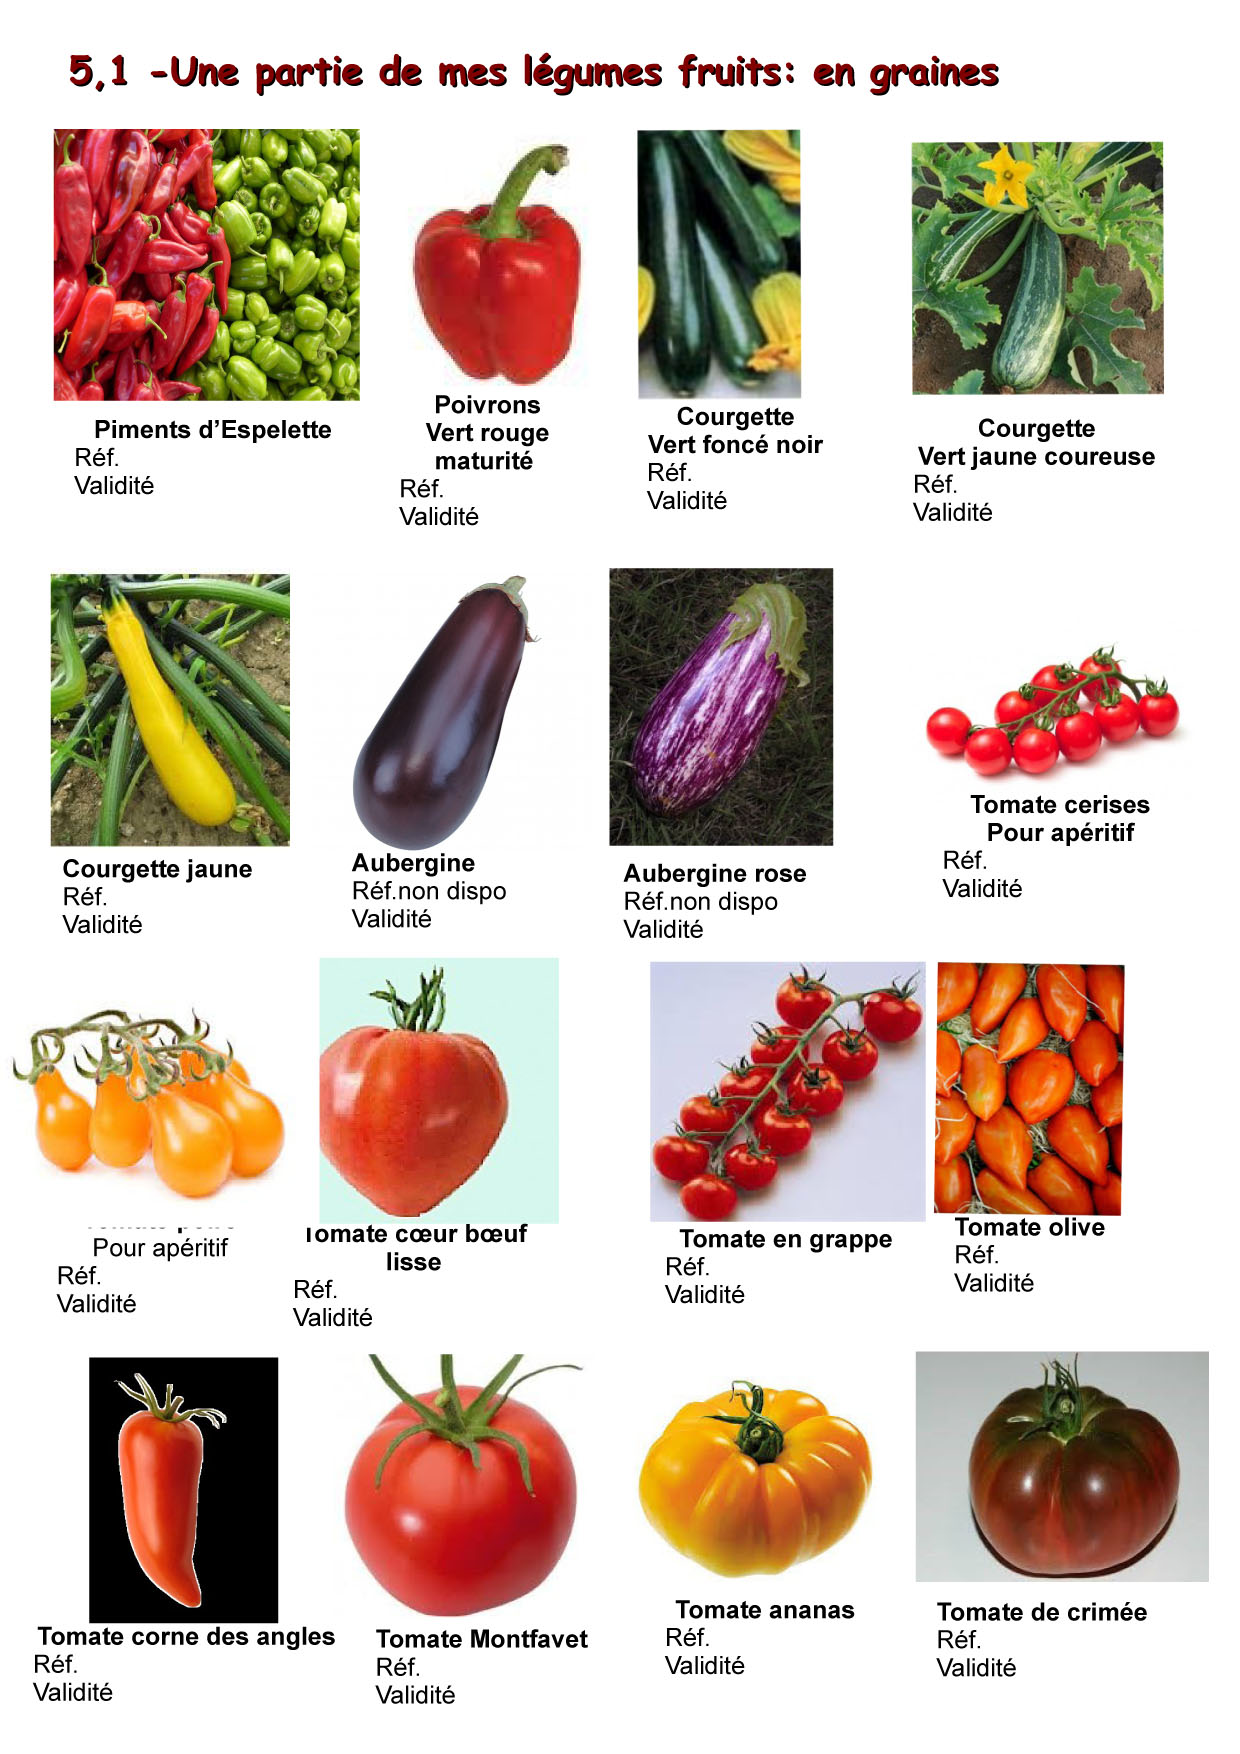 5.1 Légumes fruits